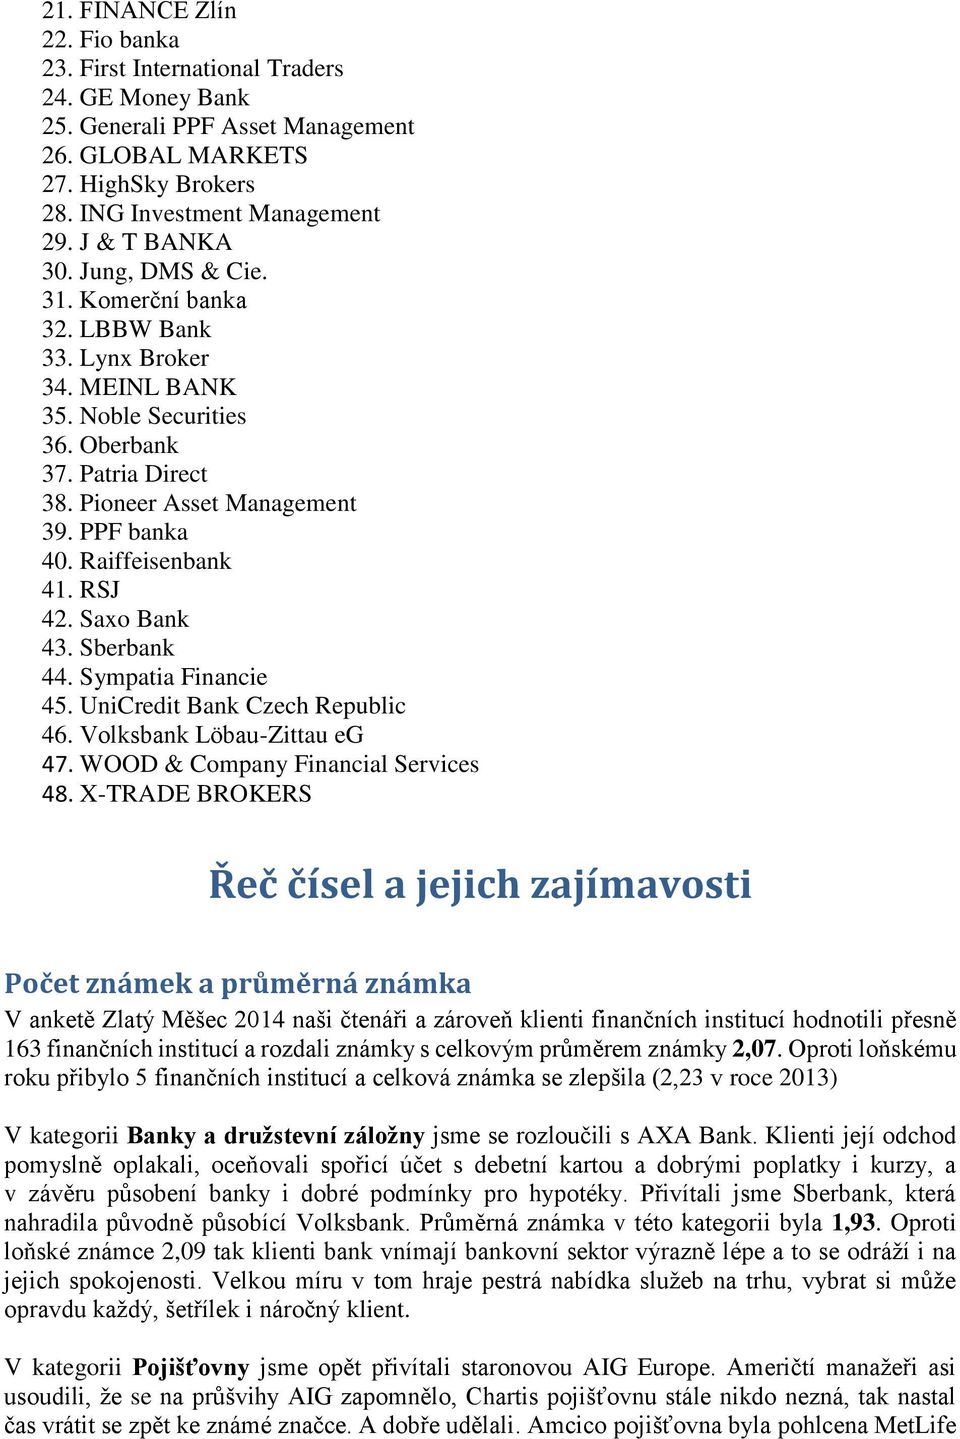 Raiffeisenbank 41. RSJ 42. Saxo Bank 43. Sberbank 44. Sympatia Financie 45. UniCredit Bank Czech Republic 46. Volksbank Löbau-Zittau eg 47. WOOD & Company Financial Services 48.